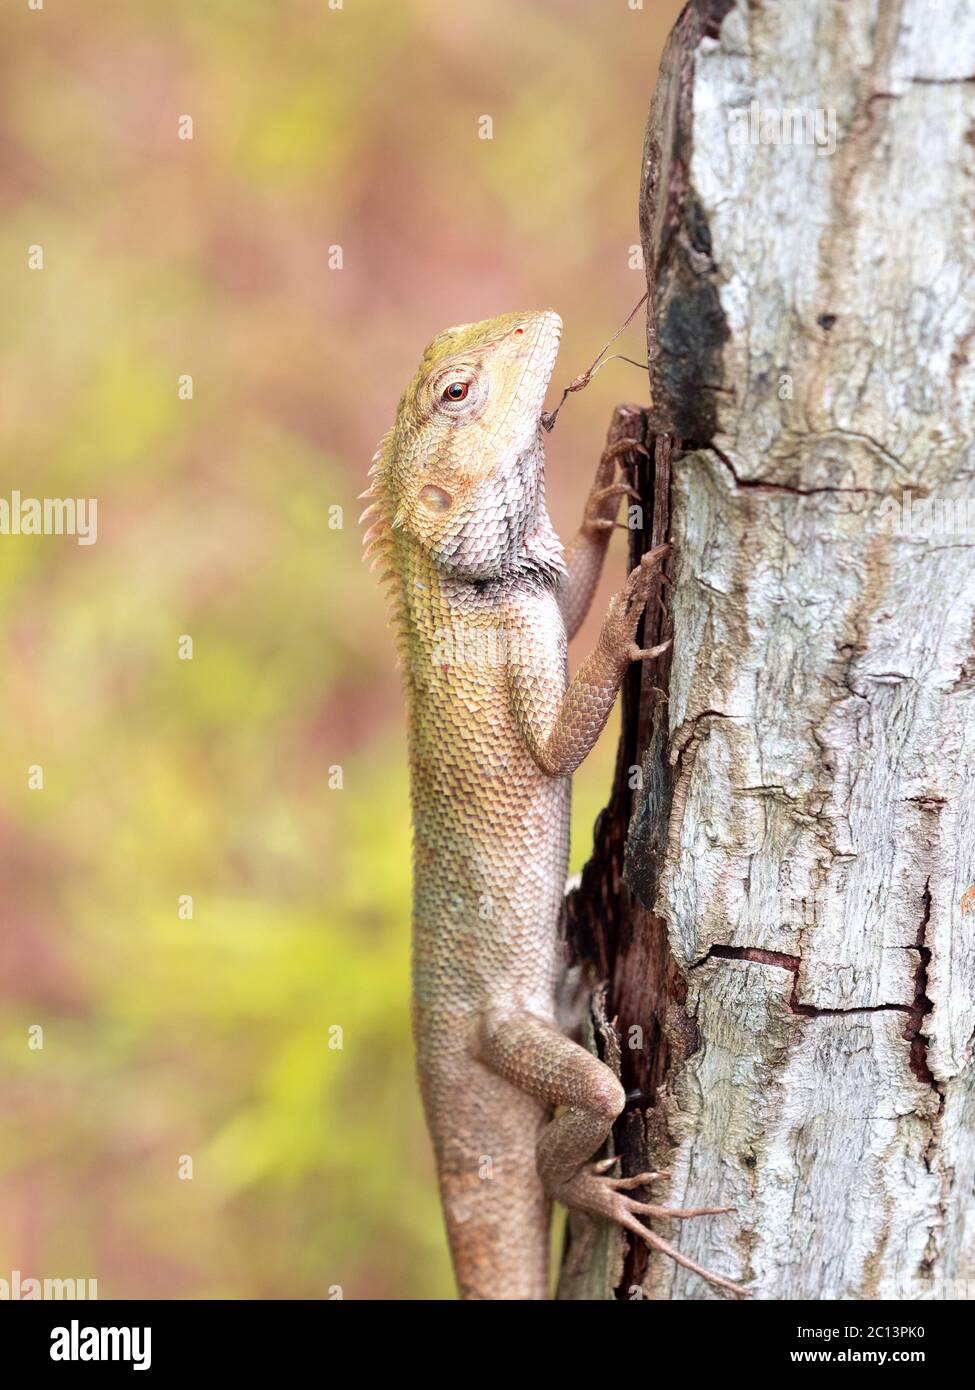 Changable Lizard climbing a tree in the Singapore Botanical Gardens Stock Photo